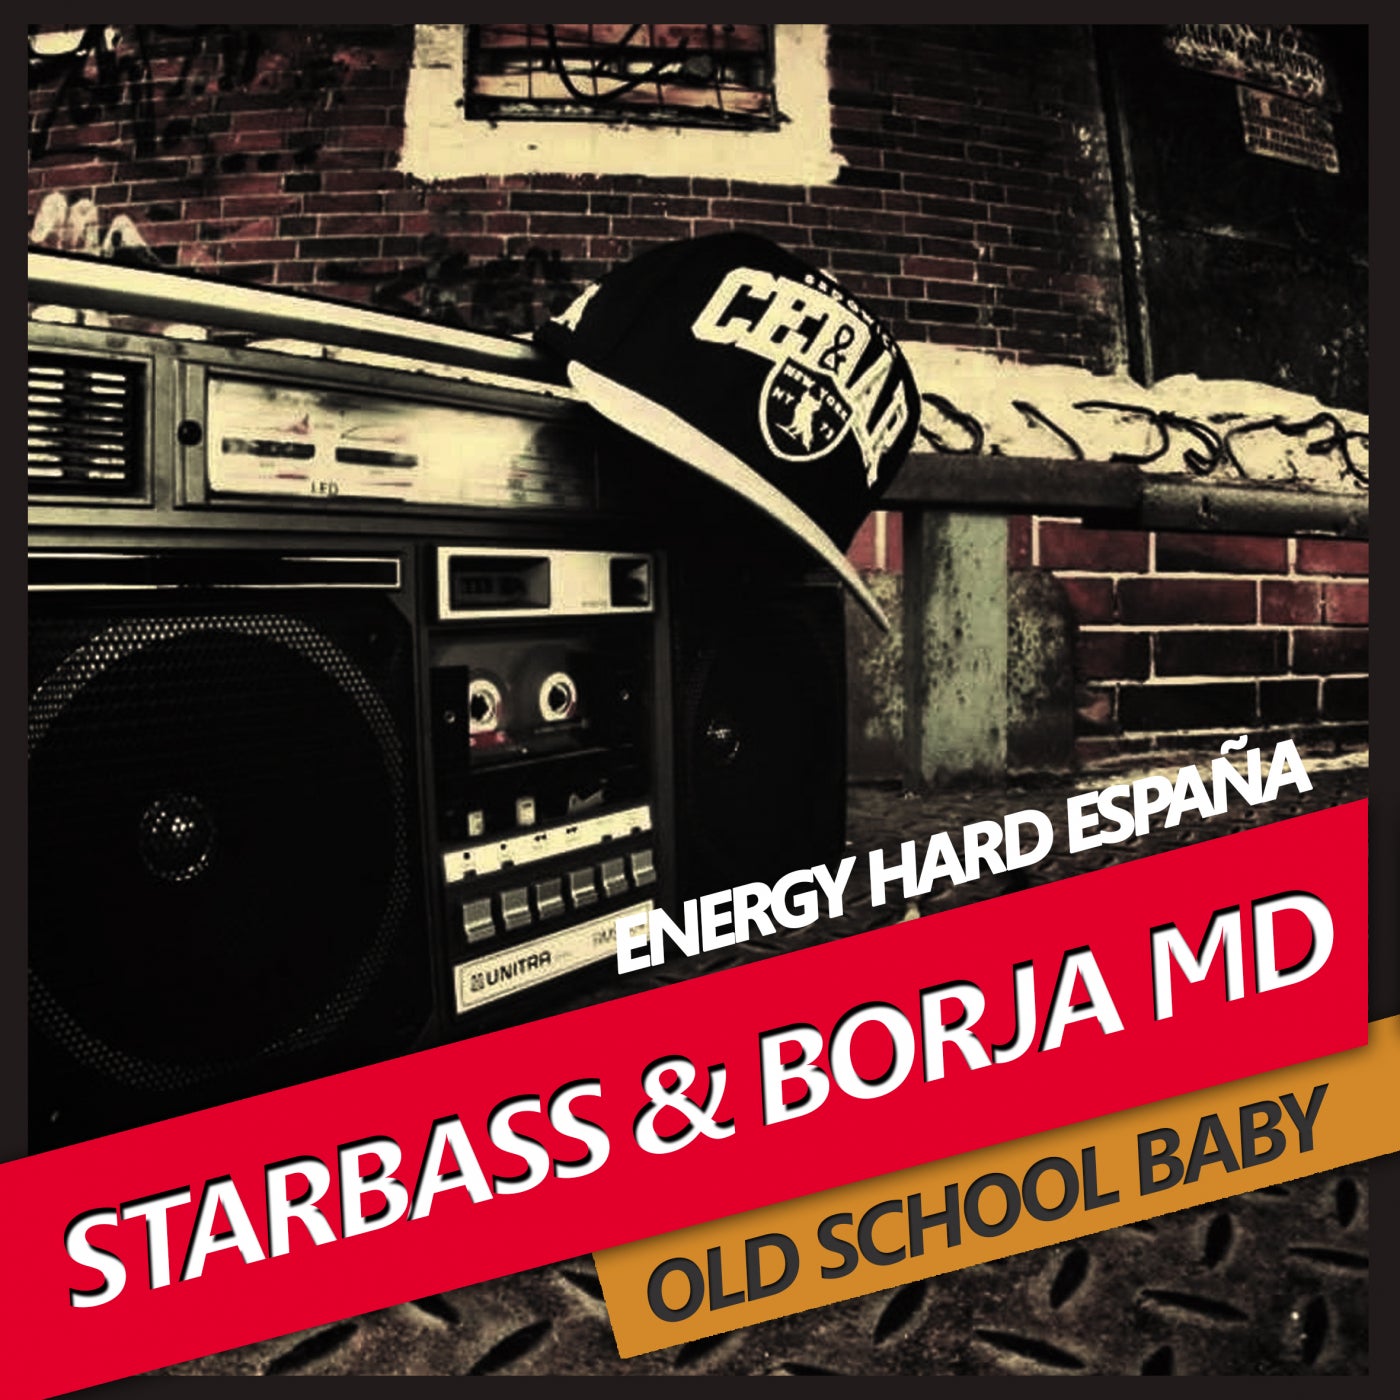 [EHE225] Starbass & Borja MD - Old School Baby 835df64d-c7c9-4a55-a073-44e44acf7d85